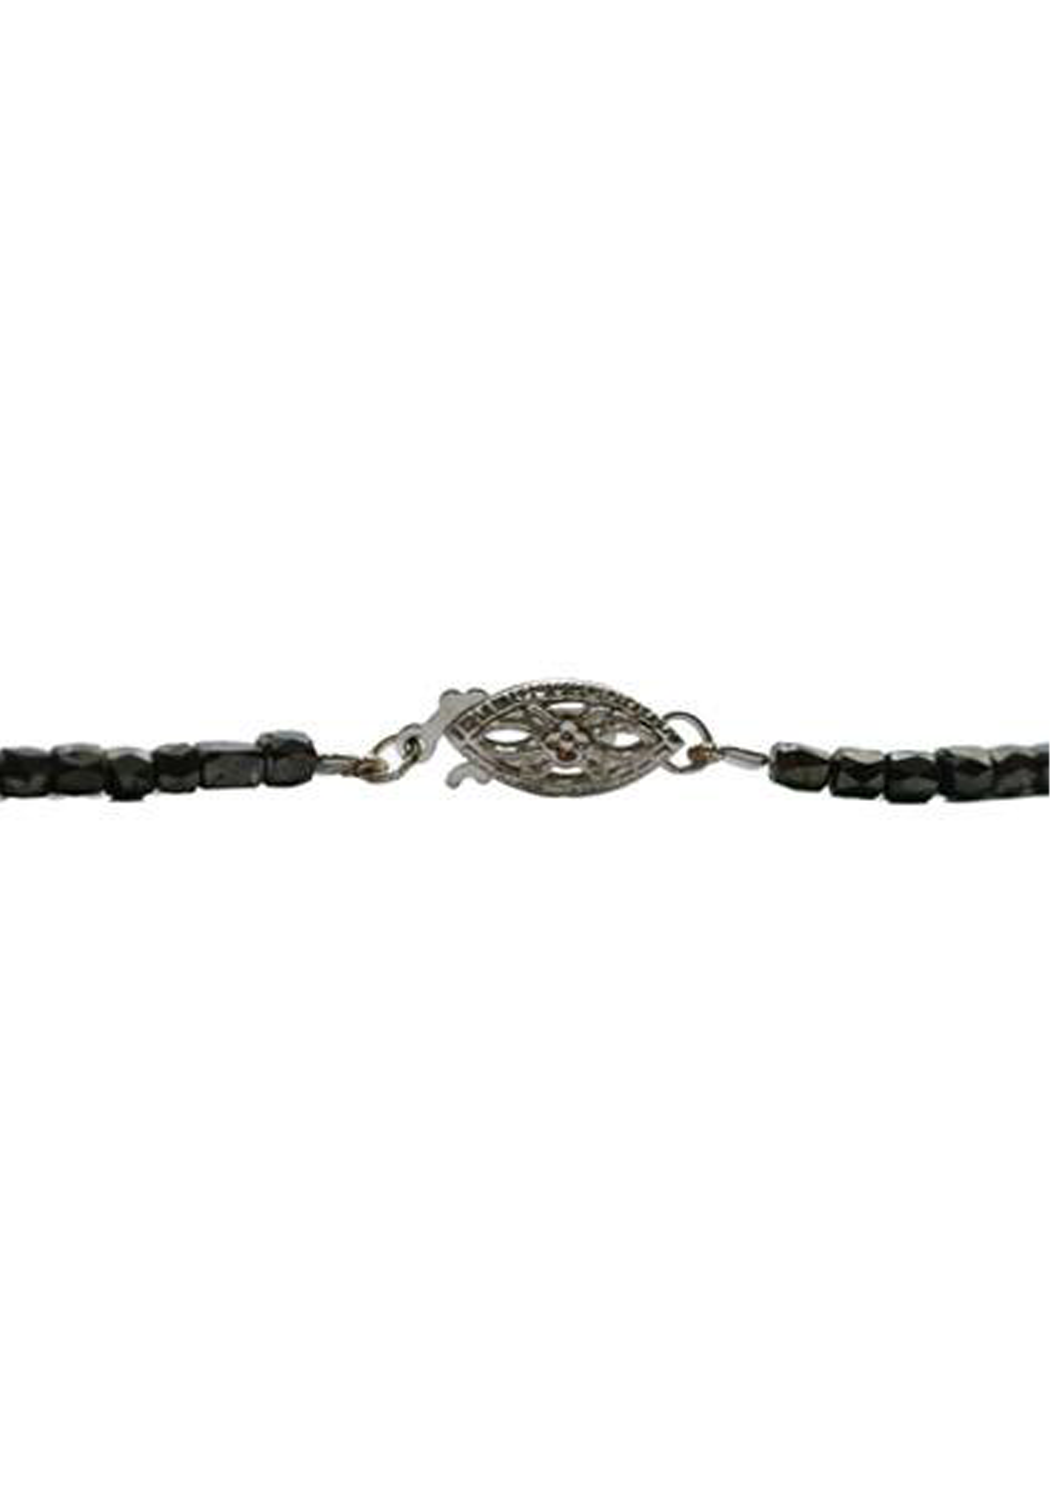 14KWG Black Diamond Rondelle Bead Necklace | OsterJewelers.com